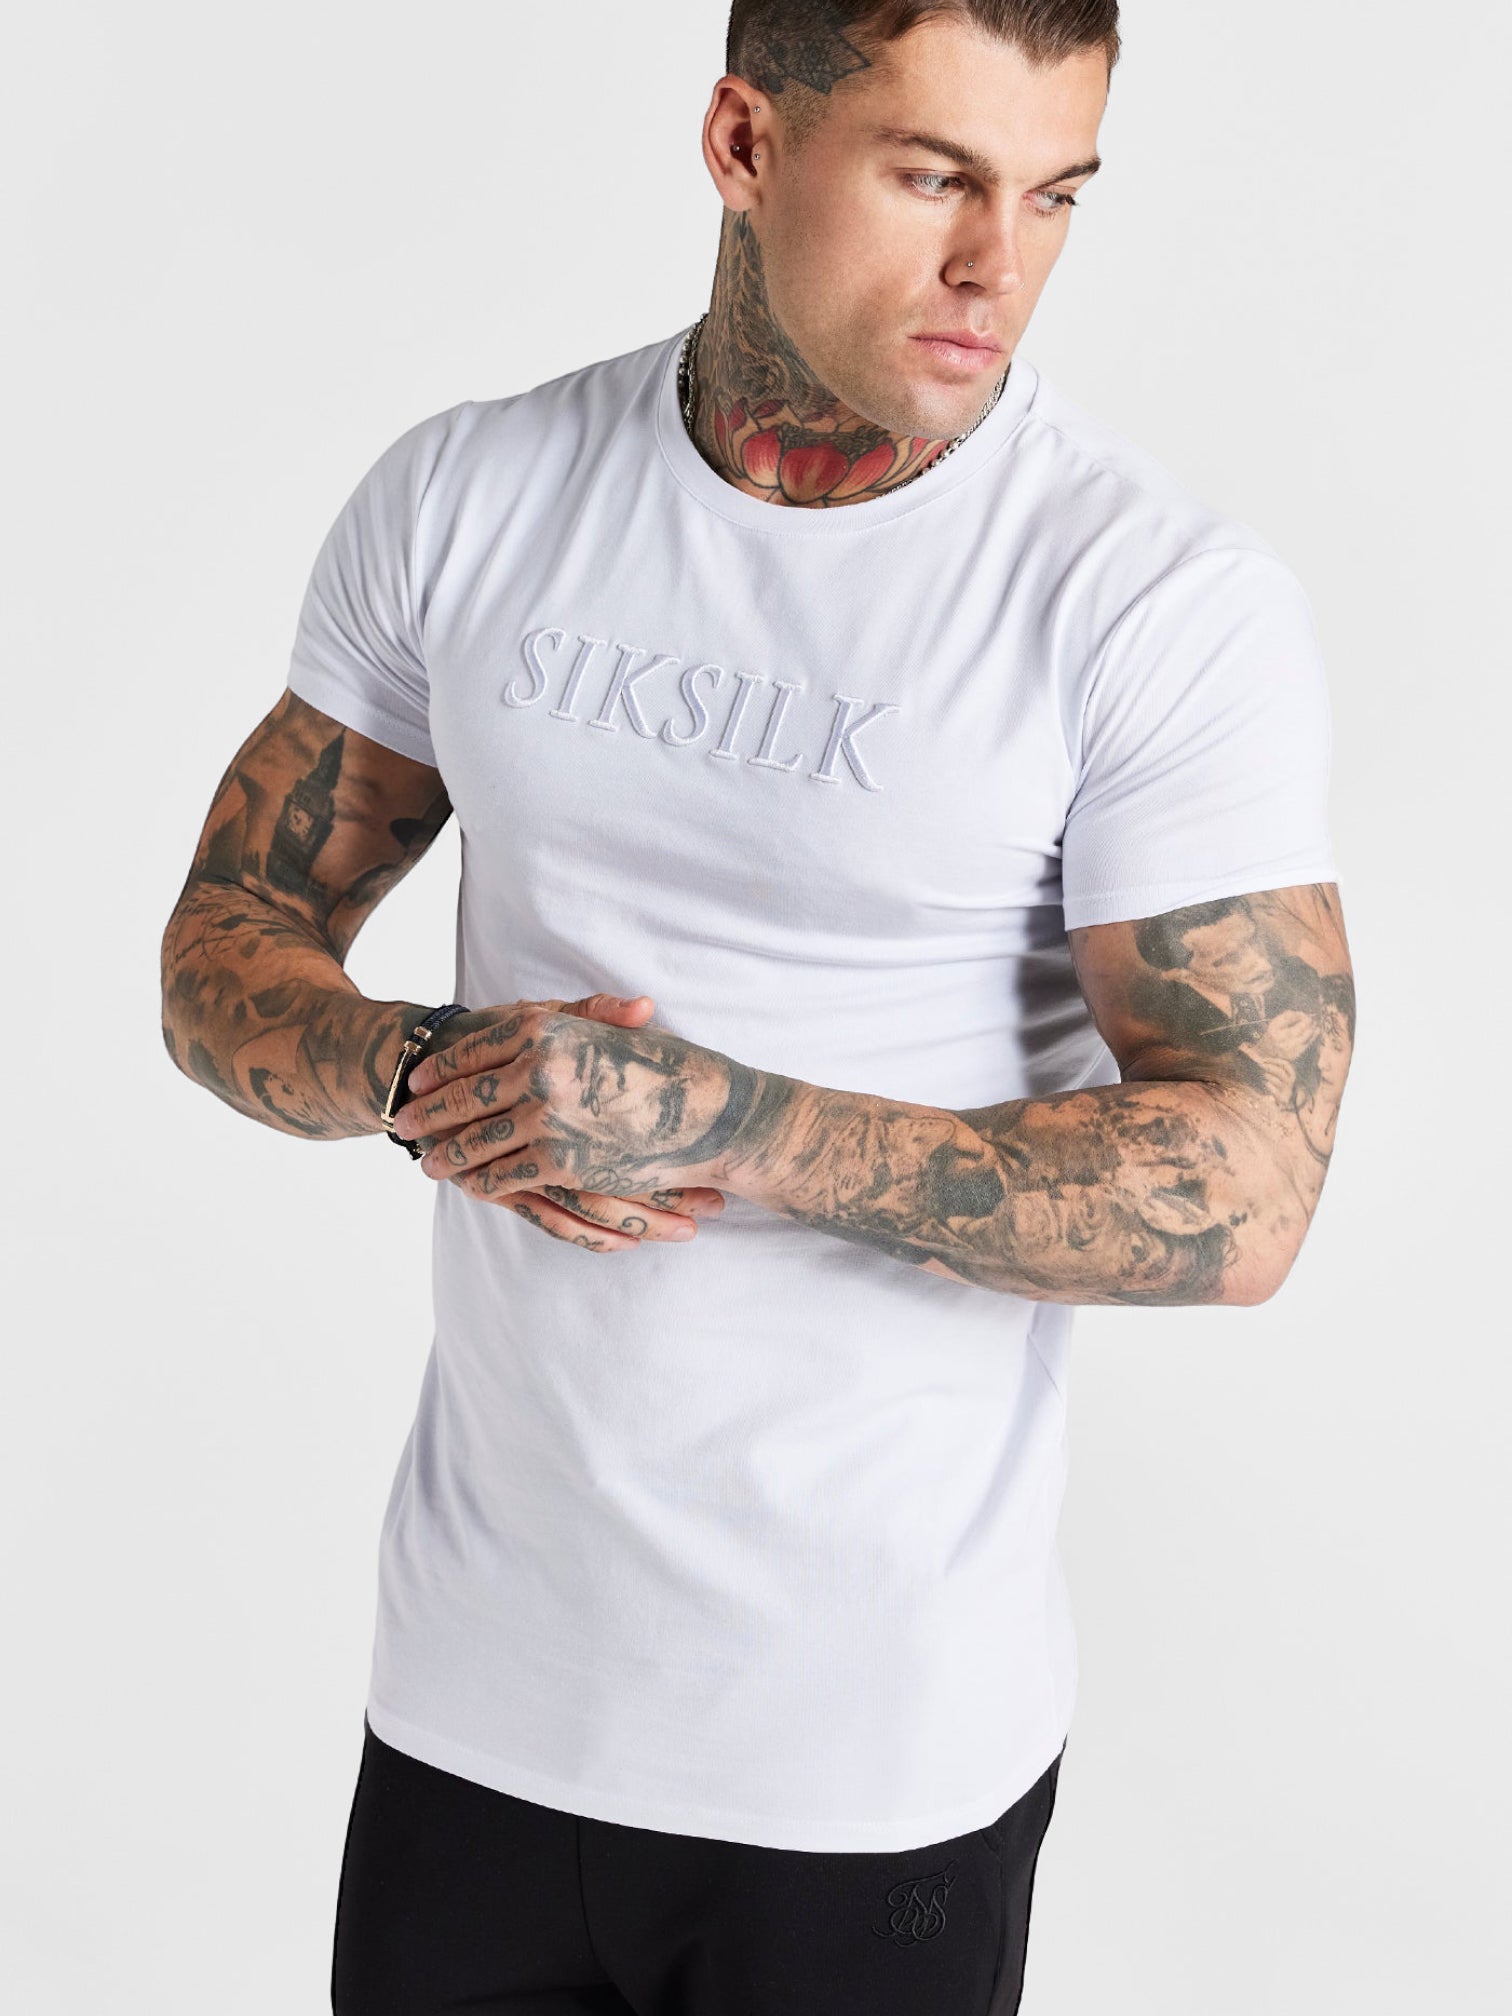 Siksilk - T-shirt MUSCLE FIT blanc